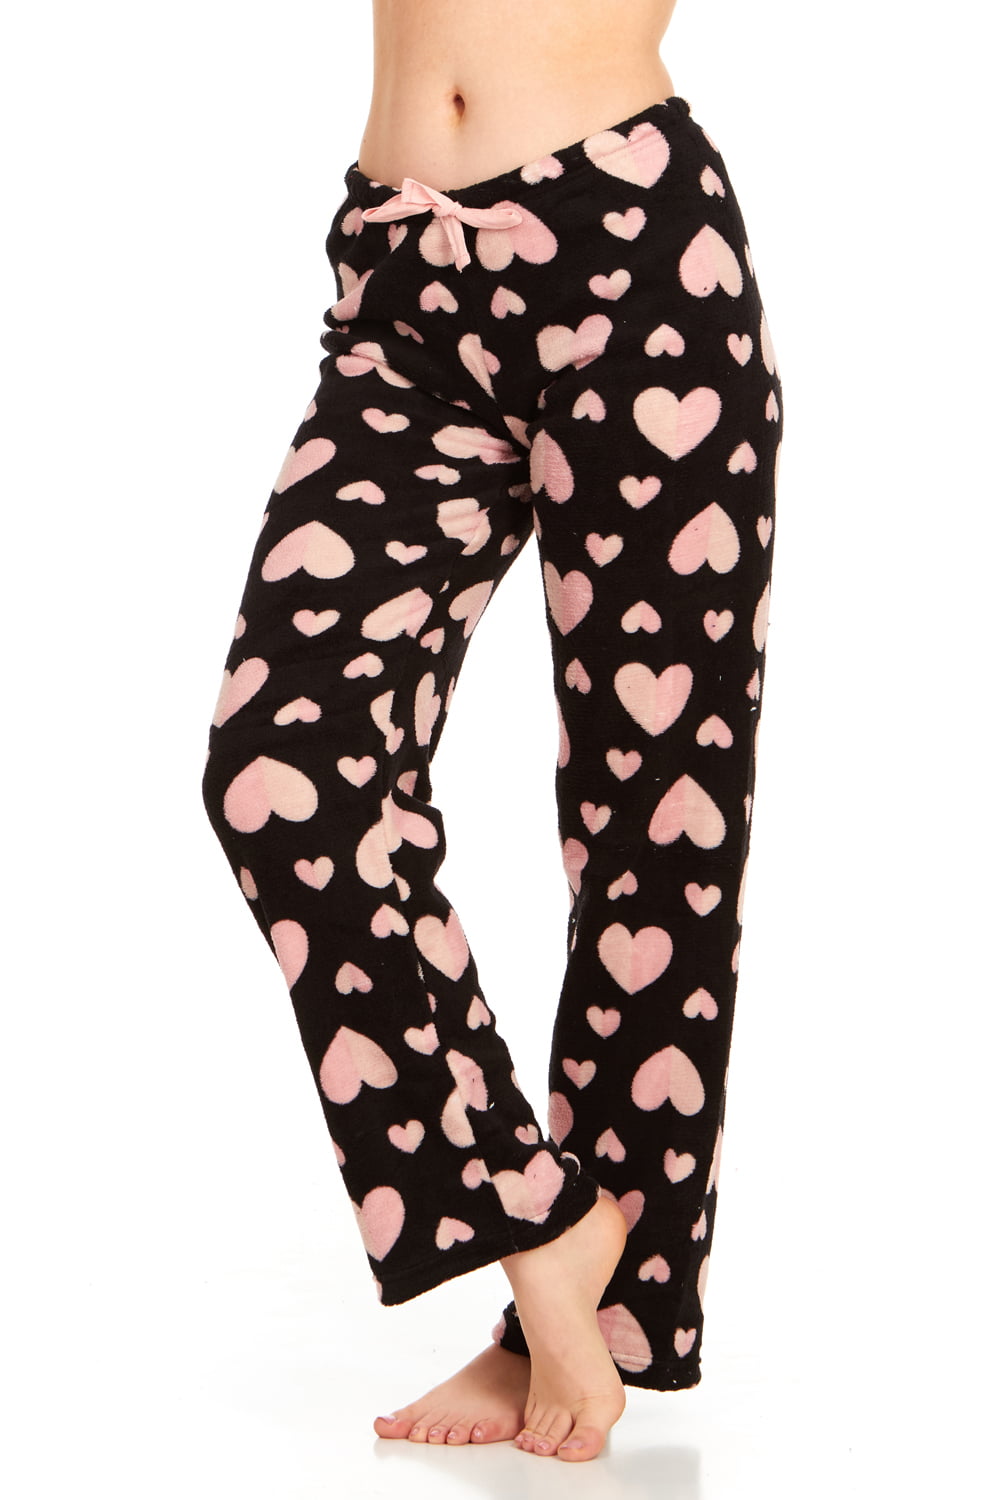 Octave® Ladies Super Soft Fleece Loungewear Pants Pyjama Bottoms 